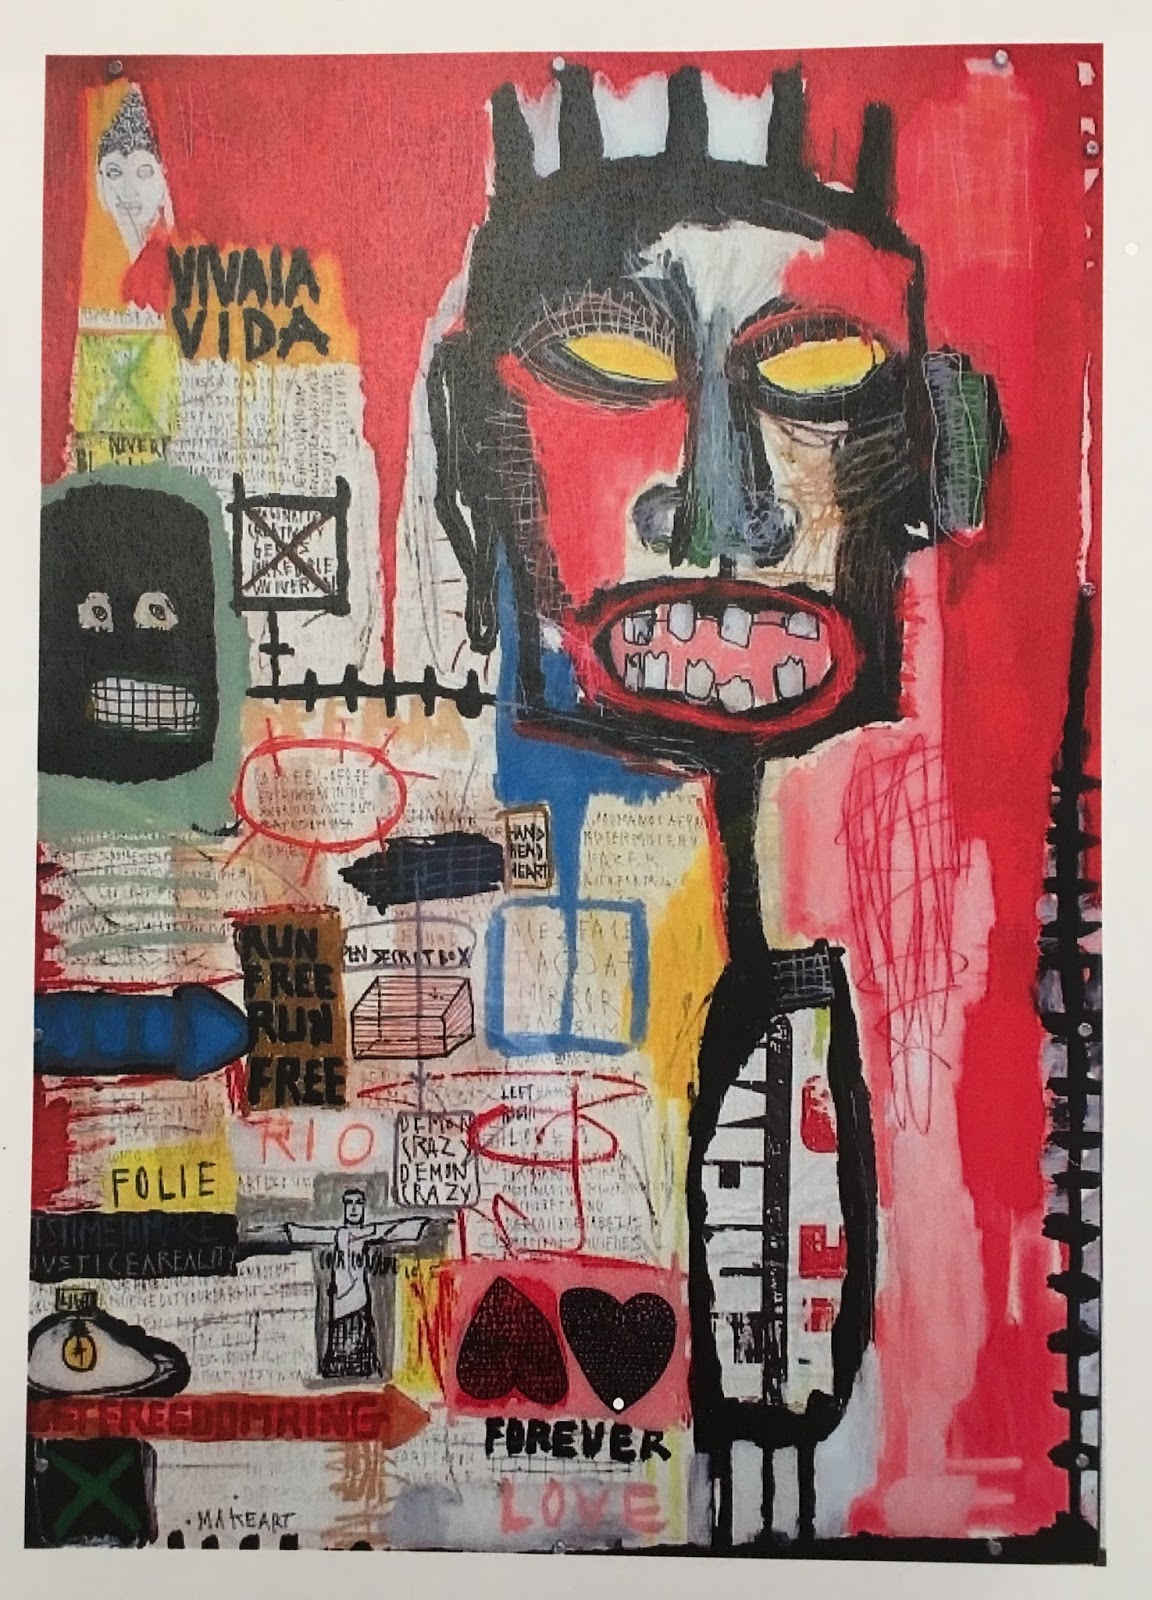 Art Room Britt: Basquiat Self Portraits with Free Association Elements